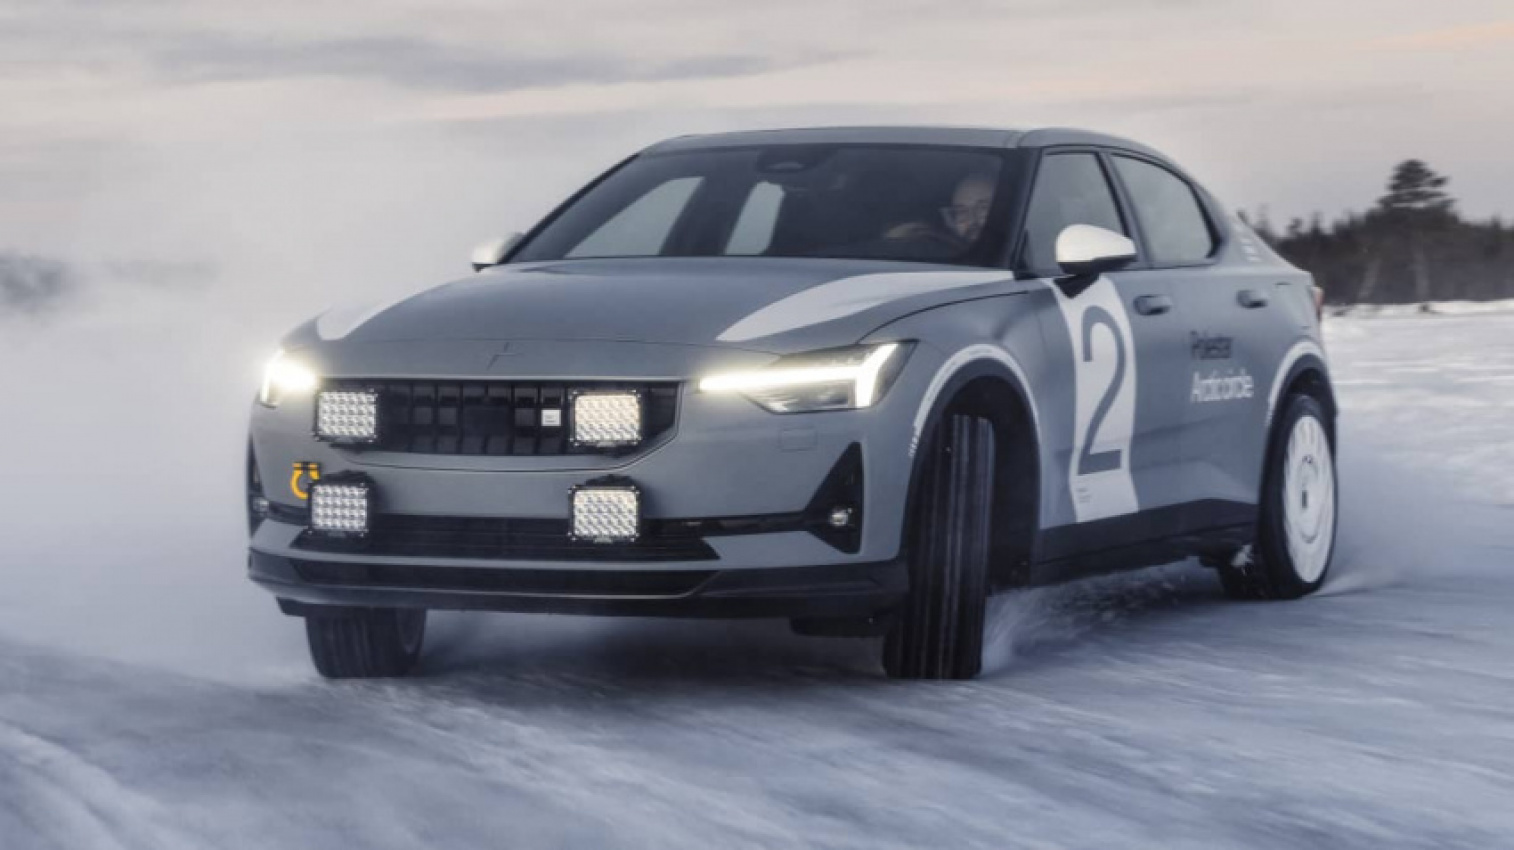 autos, cars, polestar, polestar 2 arctic circle electric rally concept revealed